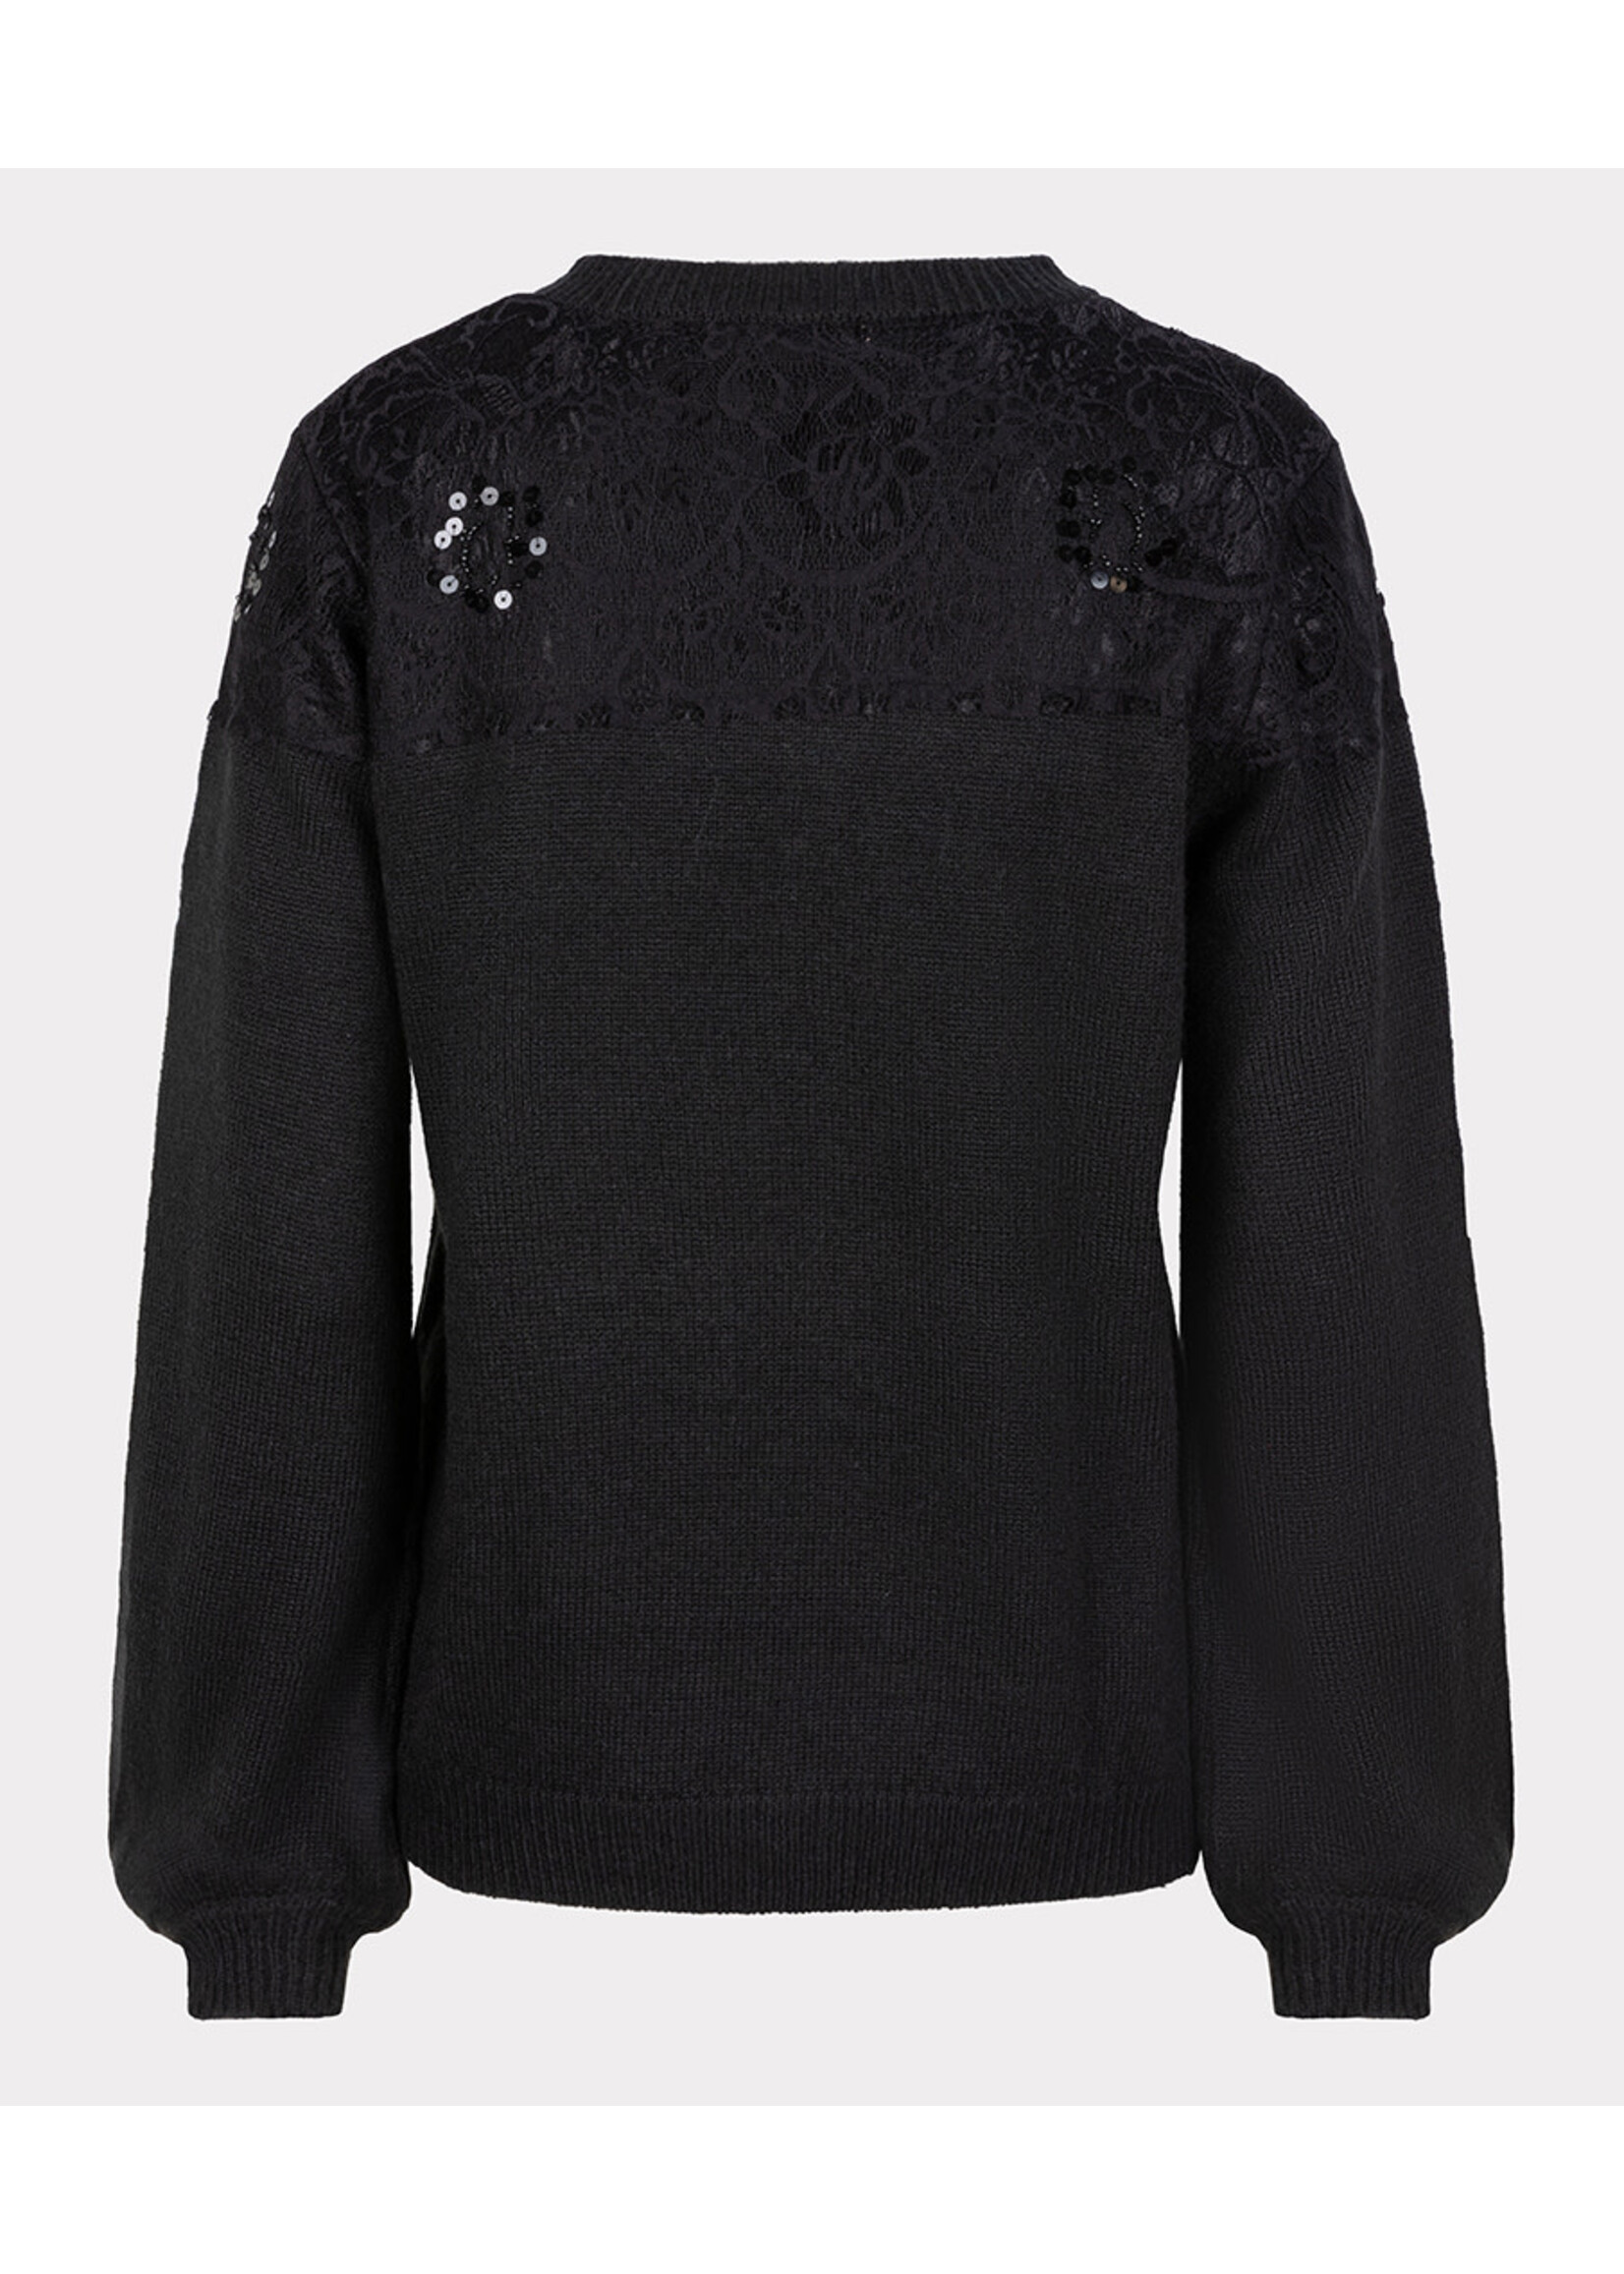 Esqualo Sweater knit lace Black